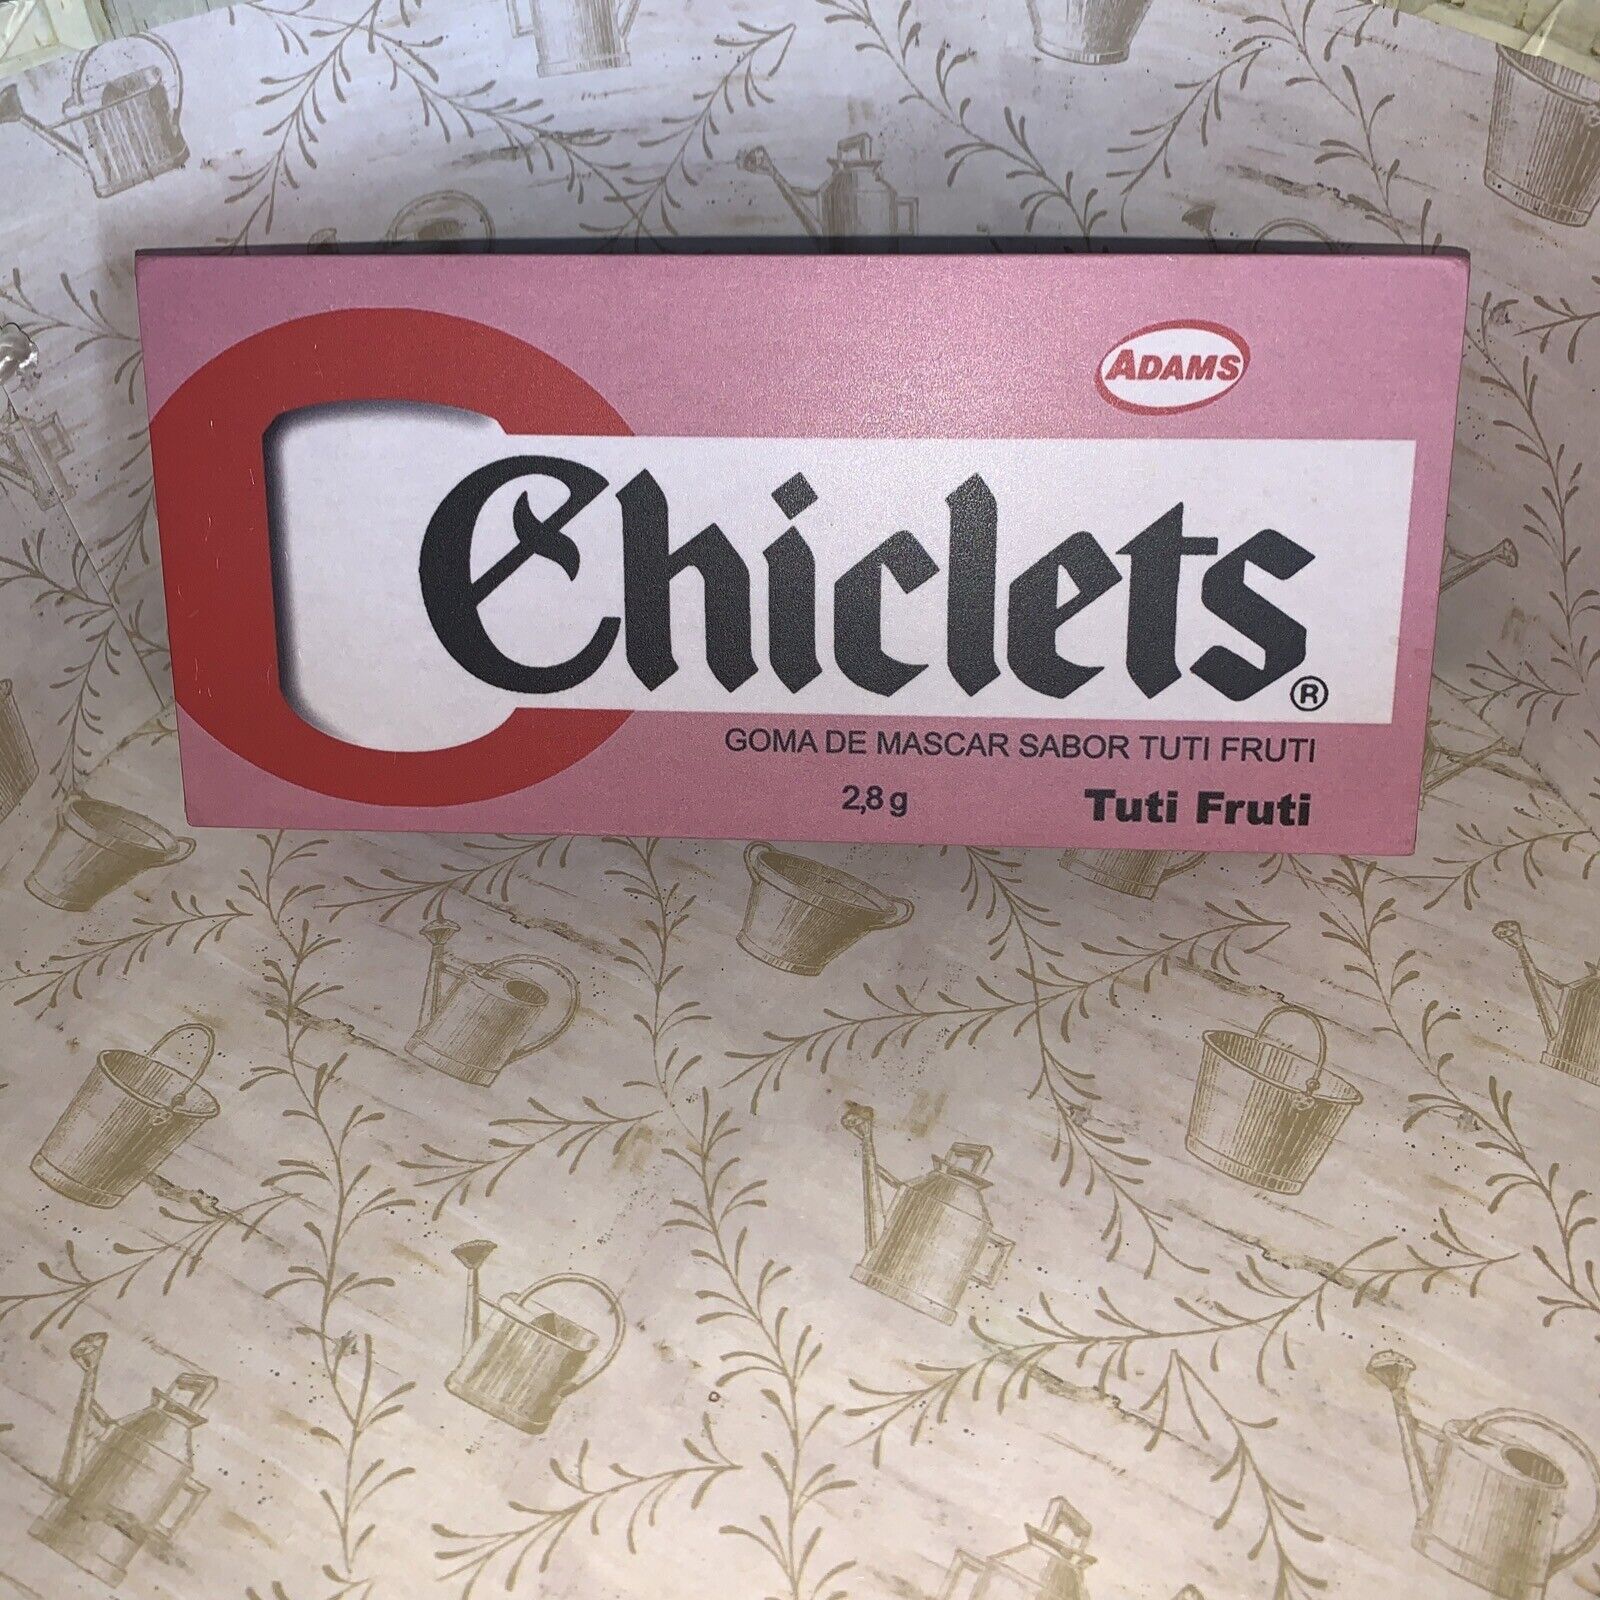 Adams Chiclets Tutu-Fruity Chewing Gum ￼Novelty Trinket Box Gina De Mascar Sabot